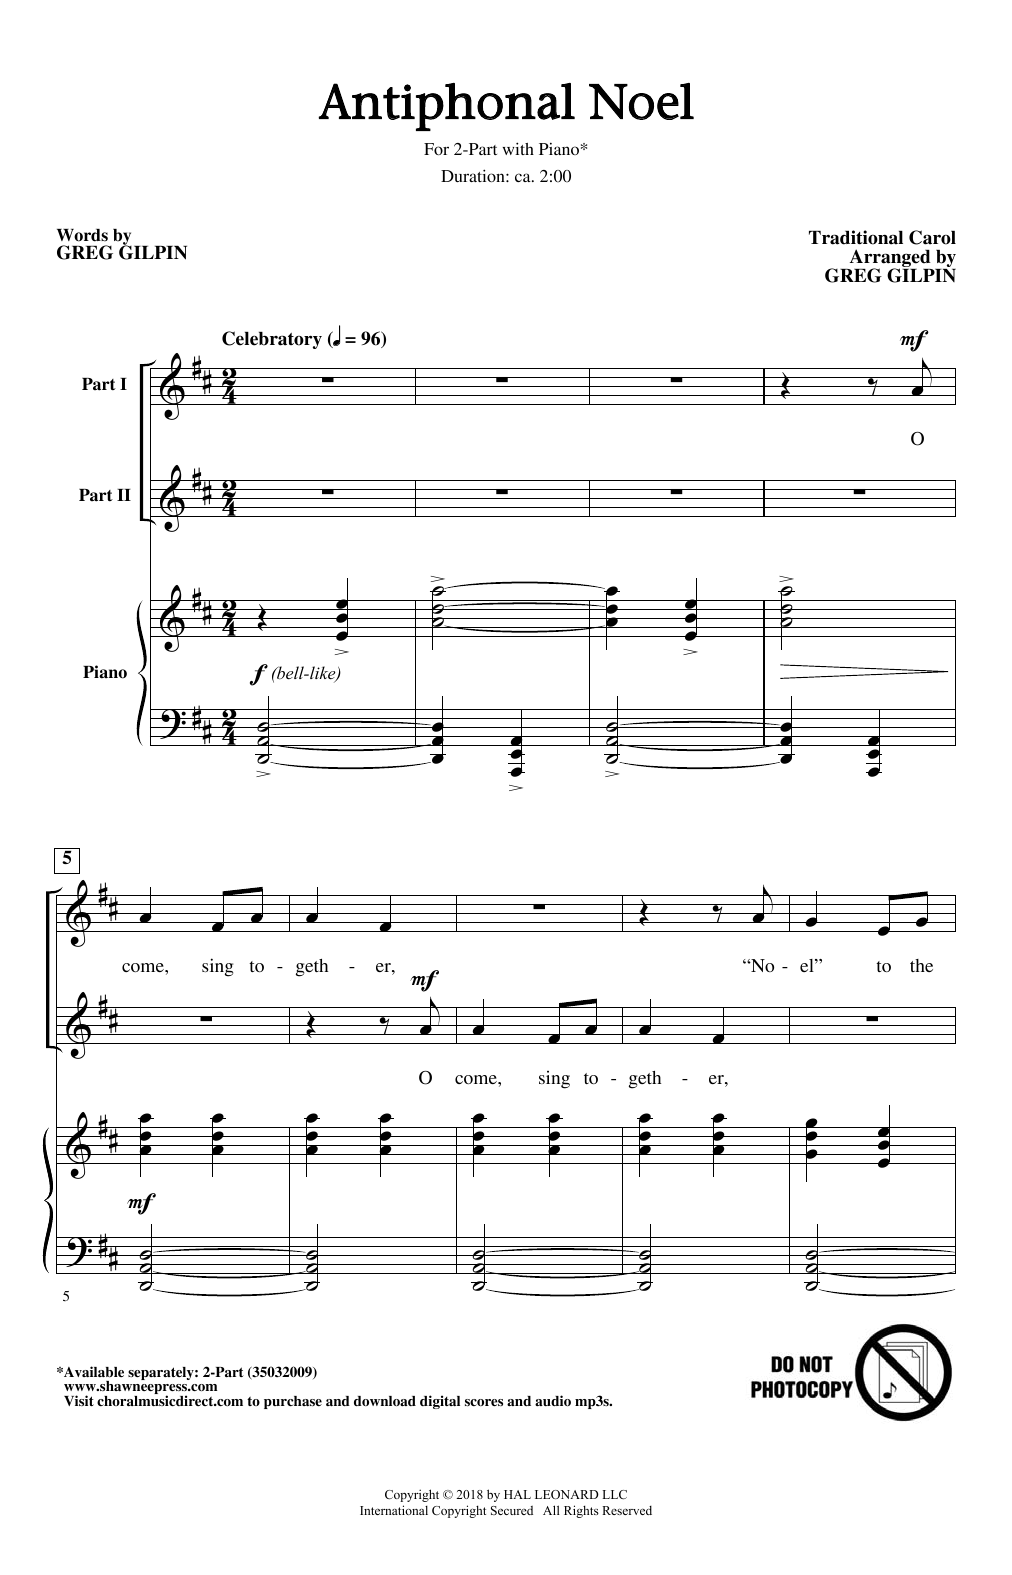 Greg Gilpin Antiphonal Noel Sheet Music Notes & Chords for 2-Part Choir - Download or Print PDF